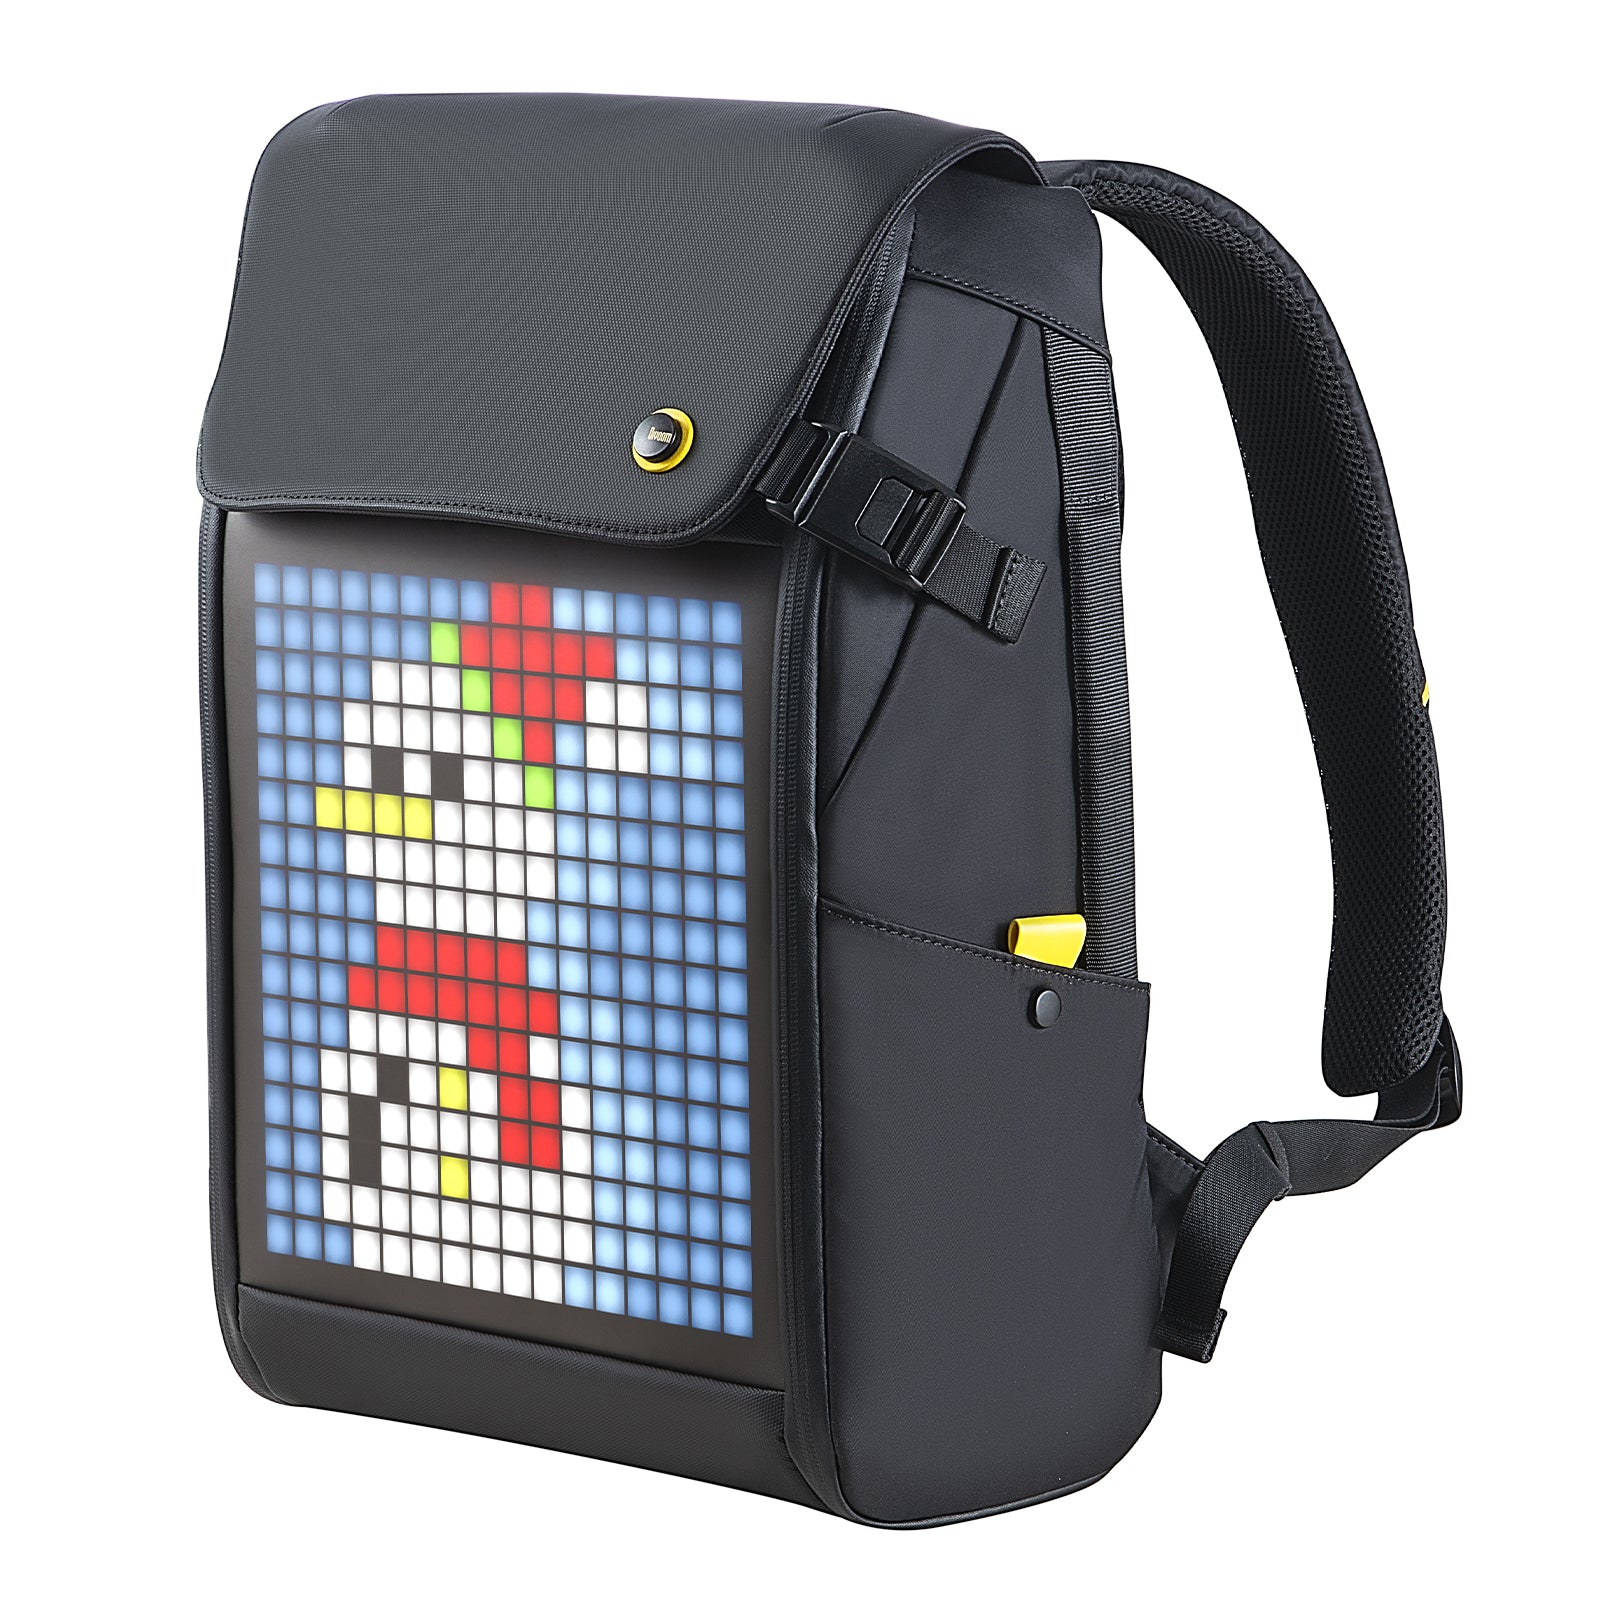 DIVOOM Pixoo LED M-Zaino |Impermeabile | Schermo LED RGB da 15 pollici